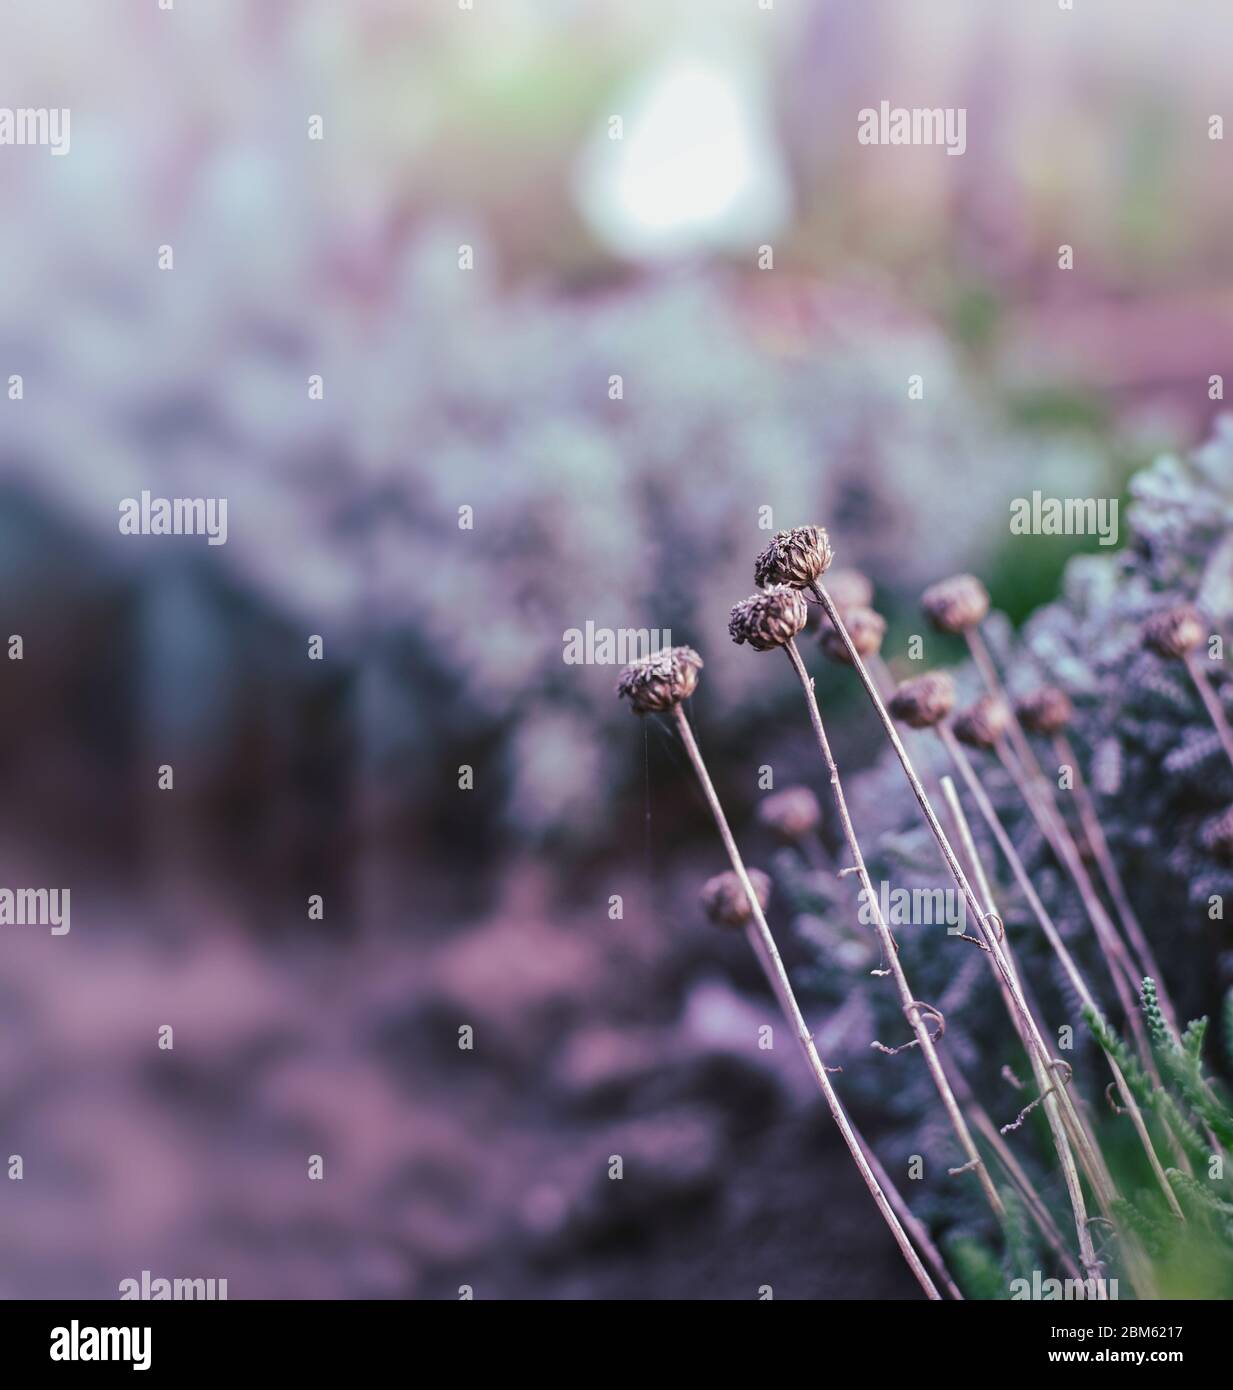 Fondos de pantalla violeta fotografías e imágenes de alta resolución - Alamy